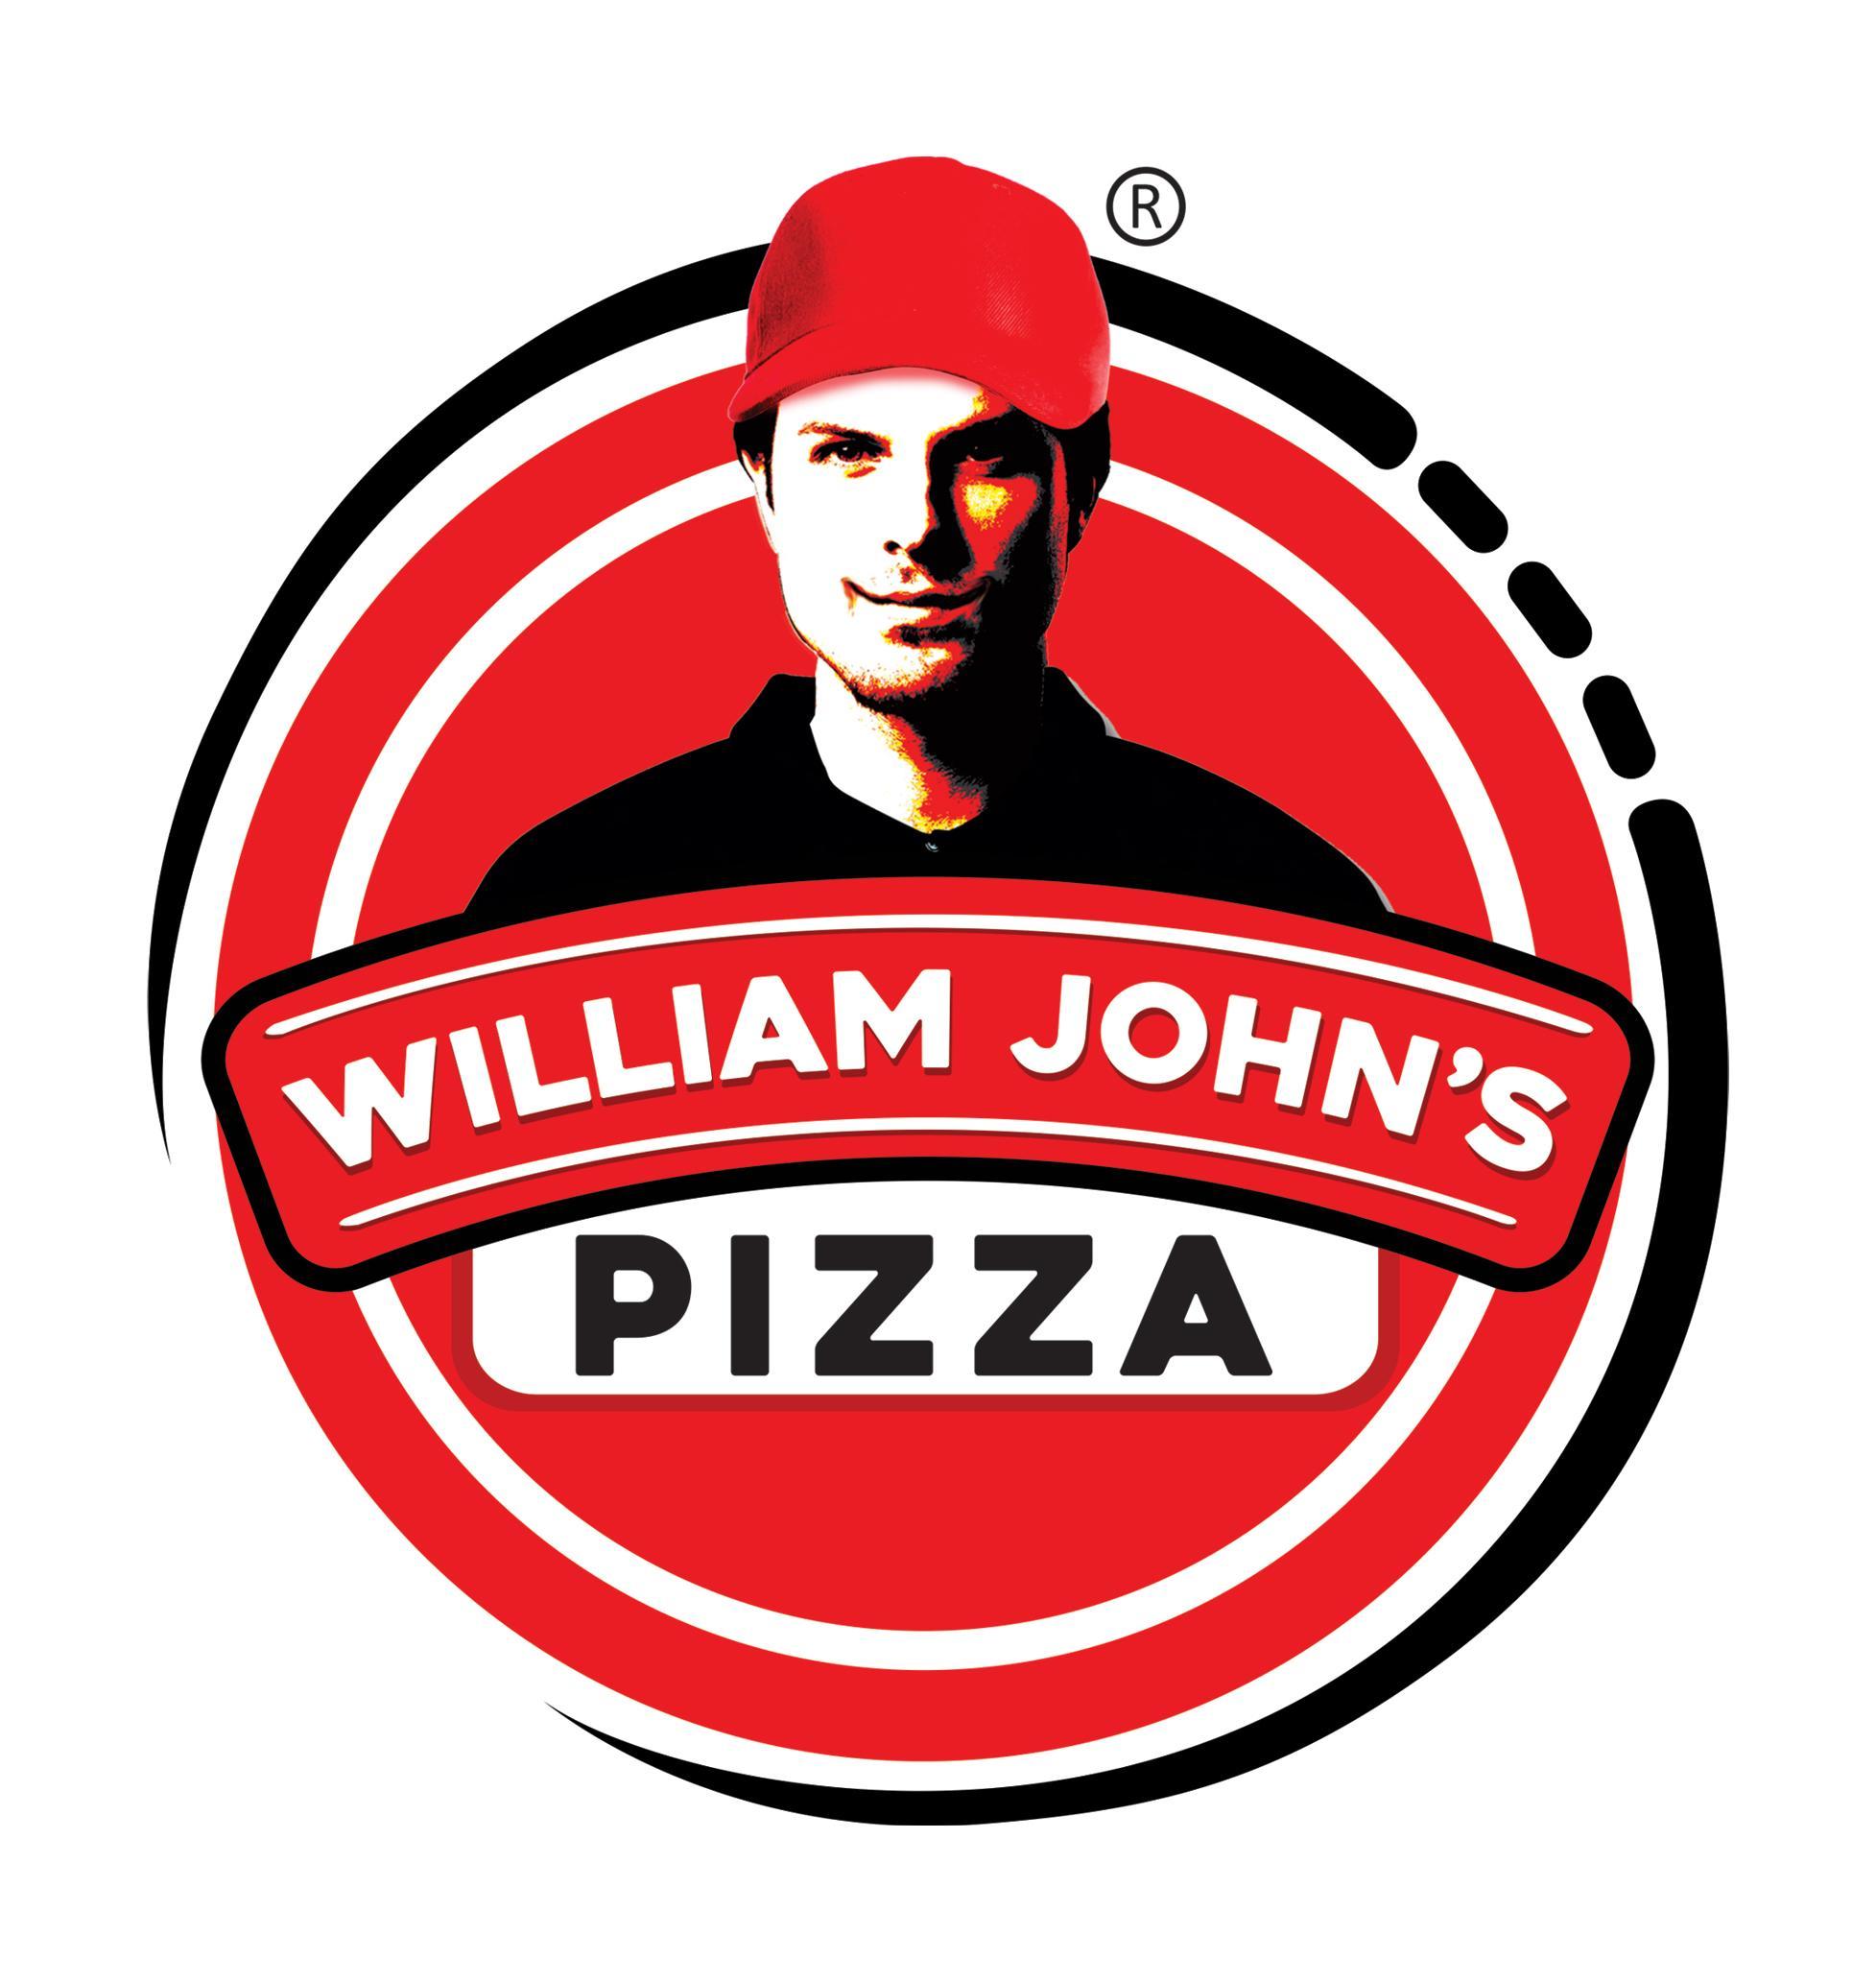 William John's Pizza - Zundal